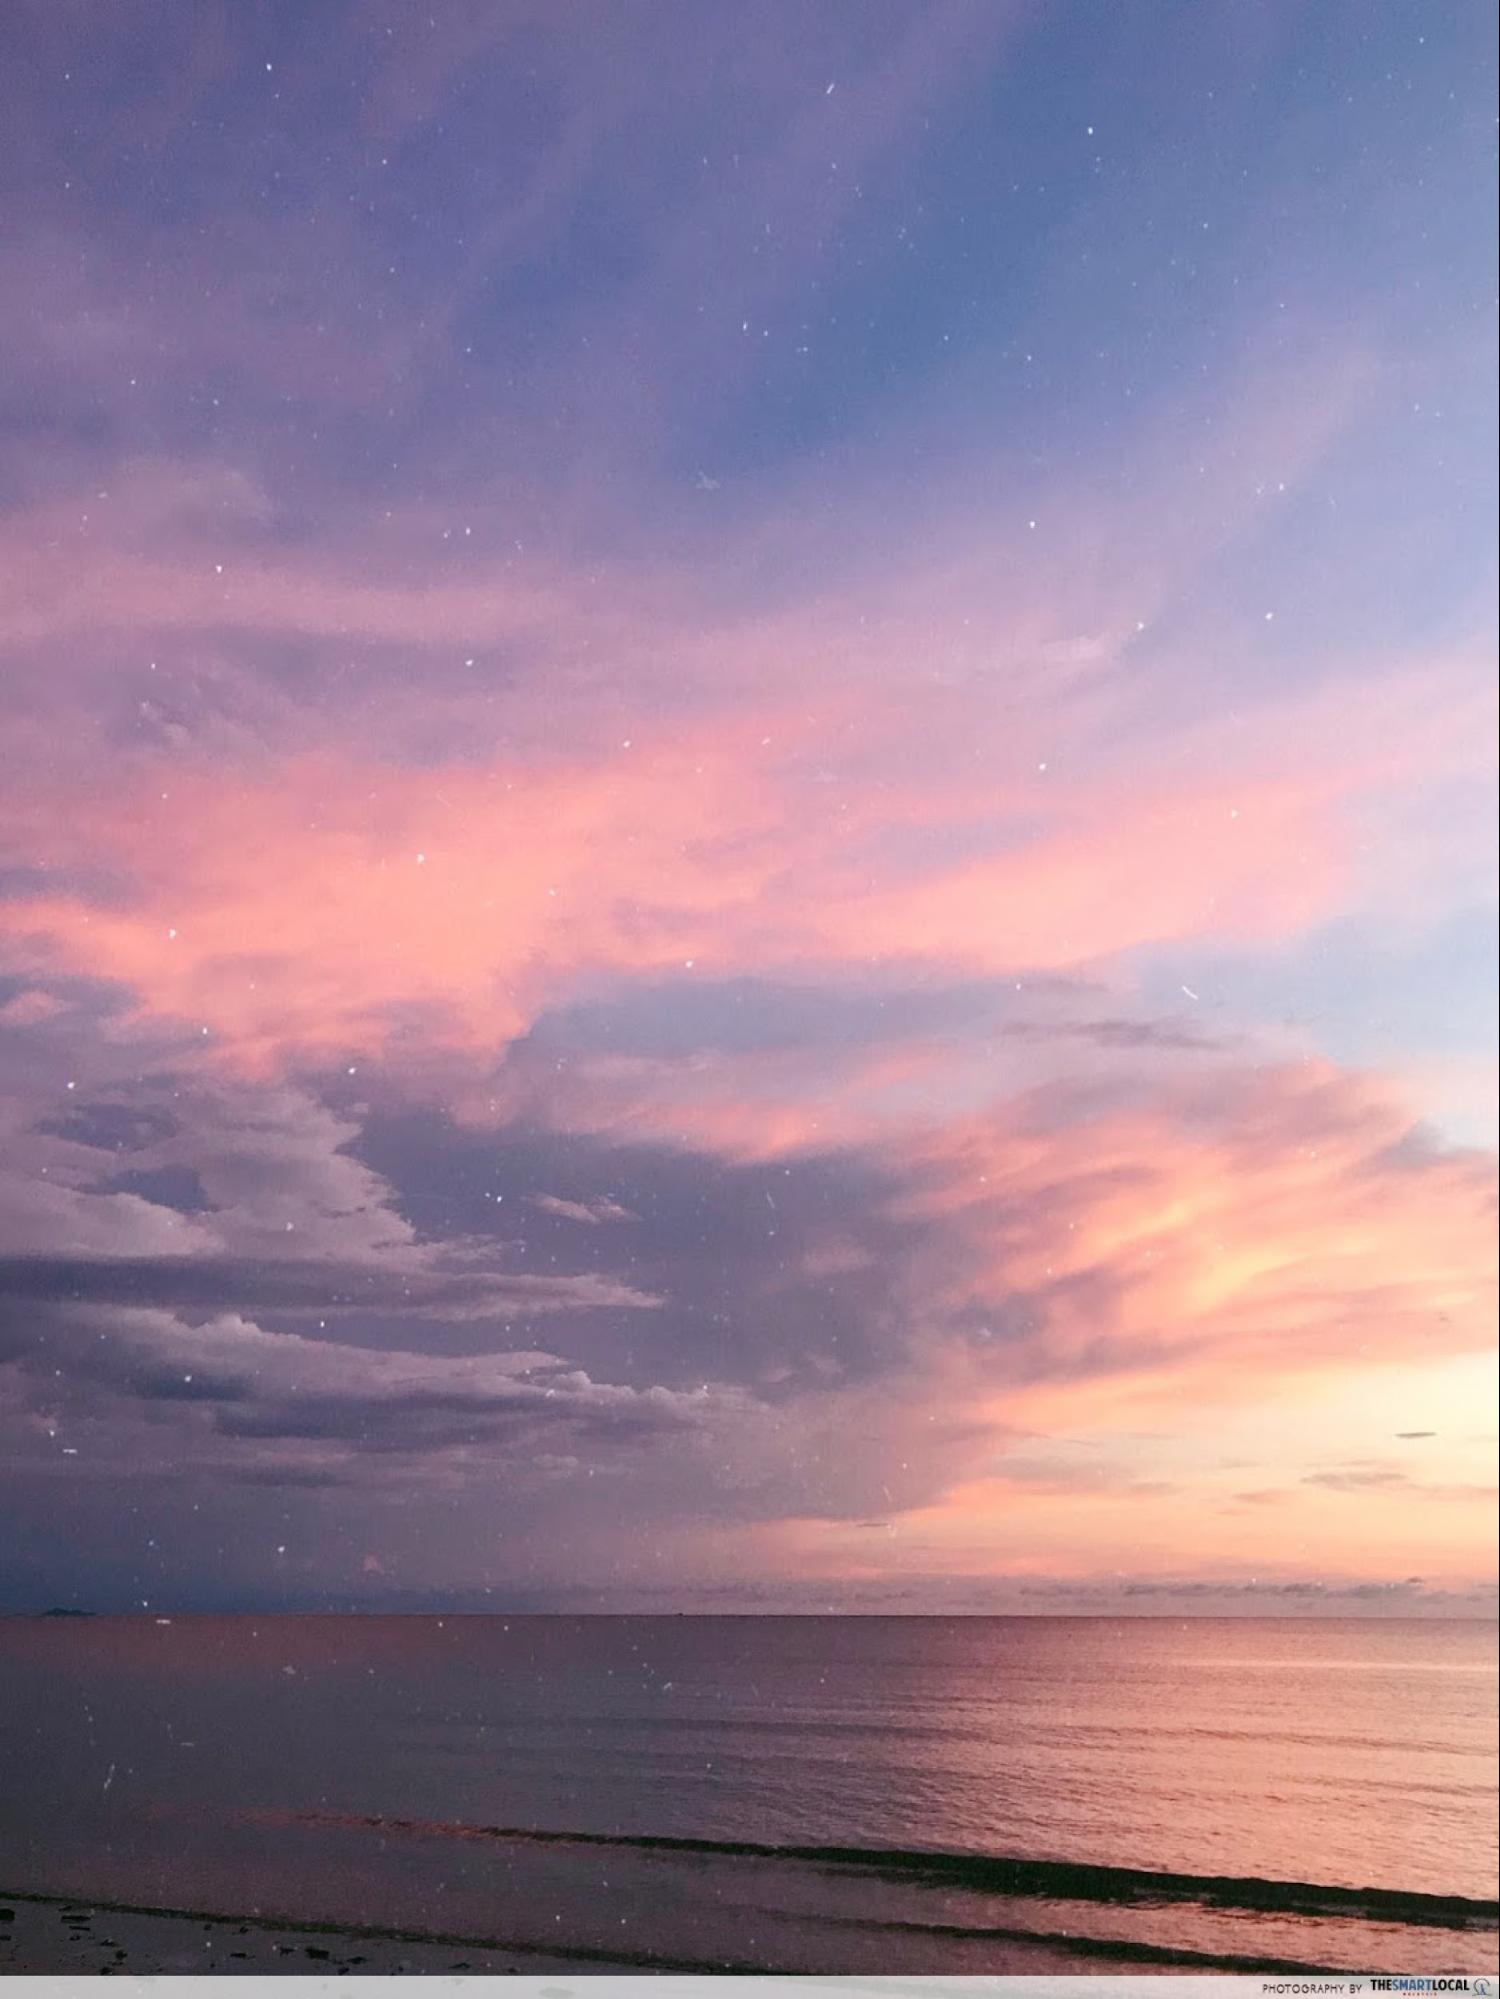 Sunset view from Tanjung Aru Beach, Kota Kinabalu